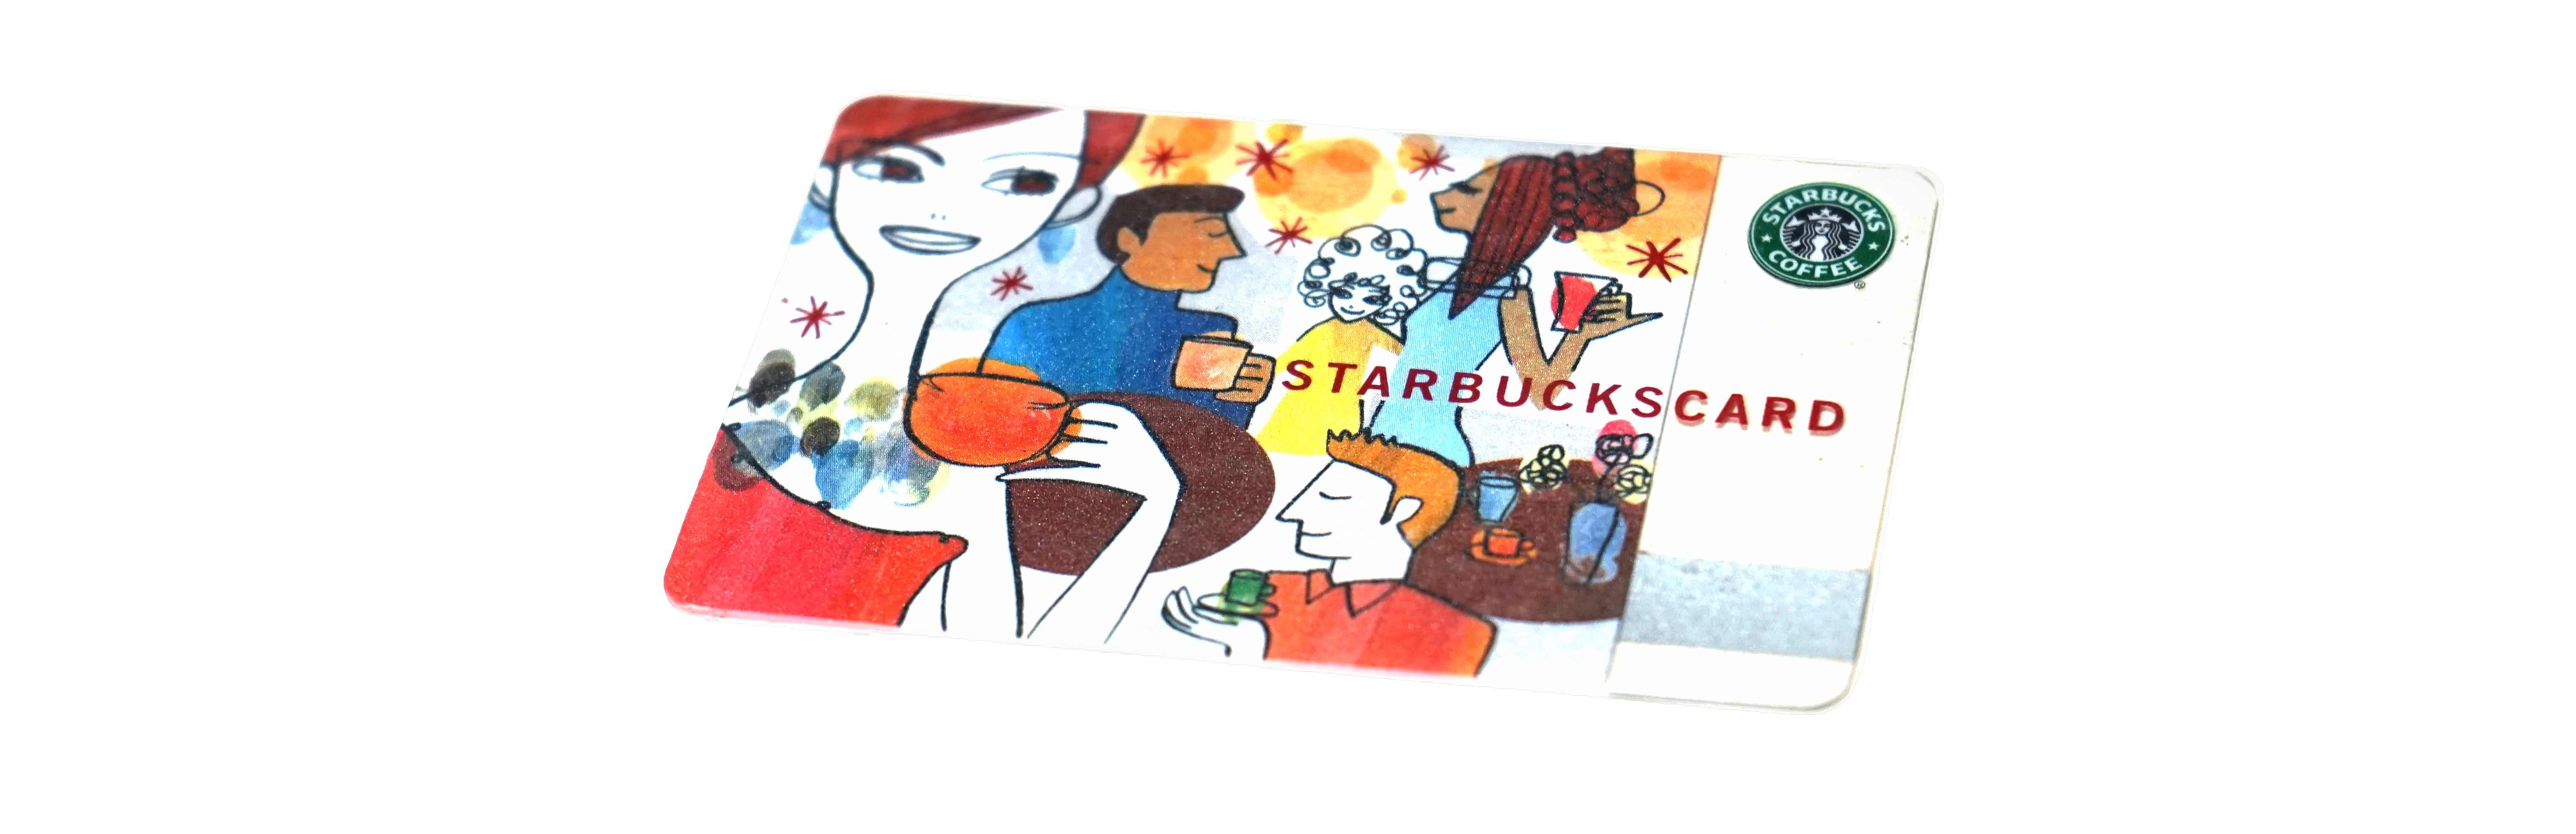 STARBUCKSCARD（スターバックスカード）